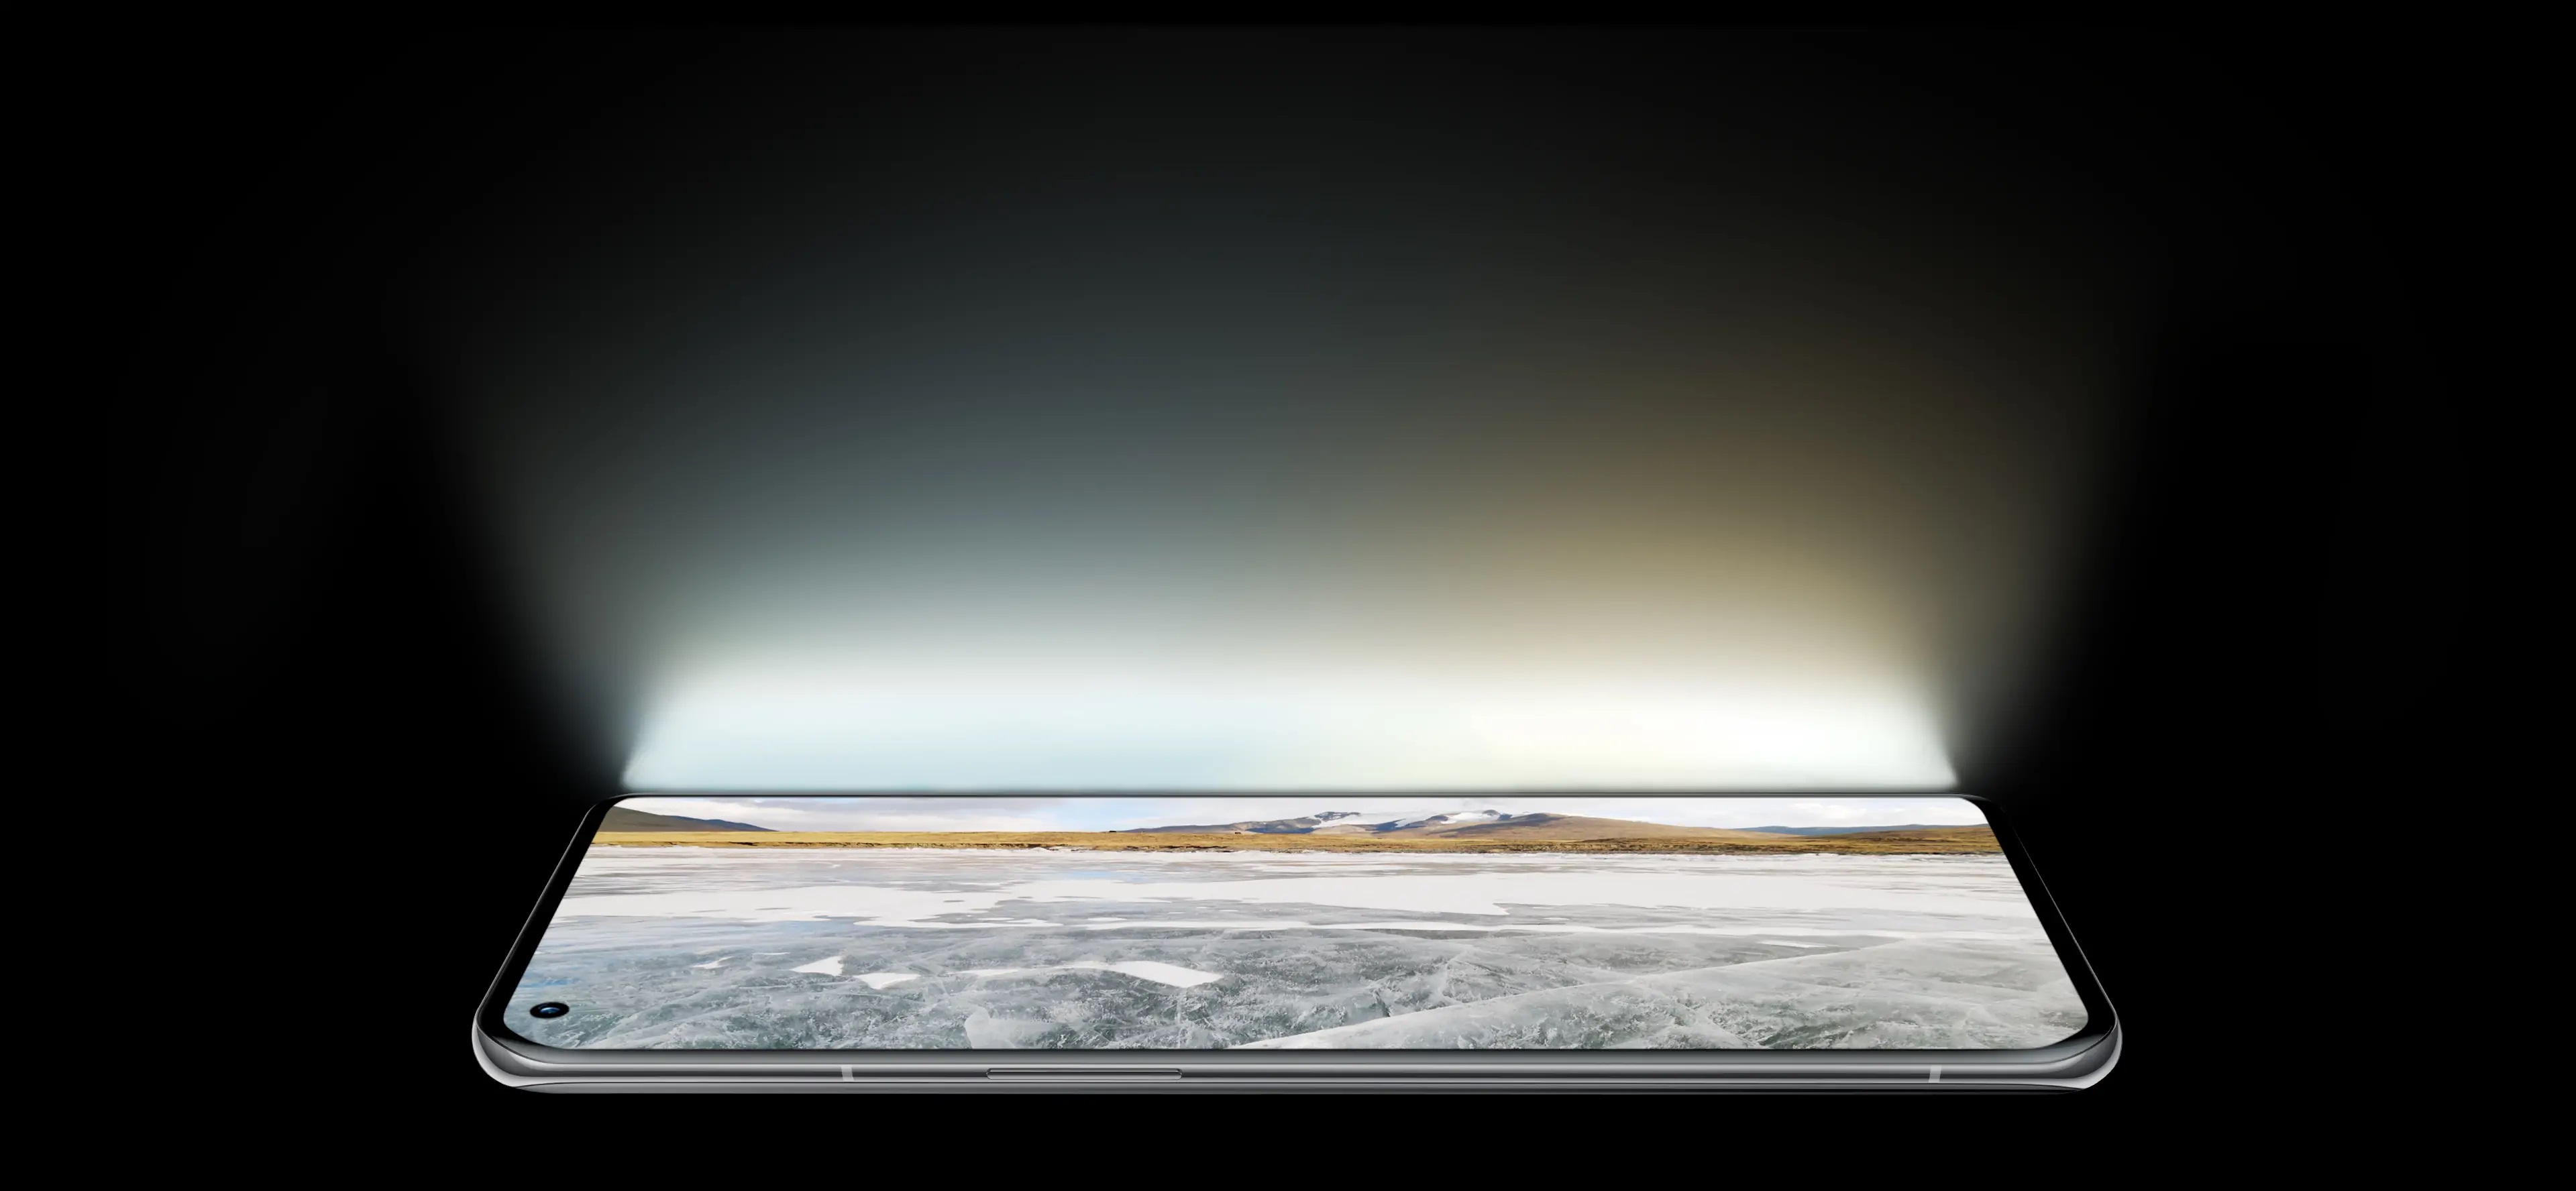 OnePlus 9 Pro 12GB/256GB Stellar Black